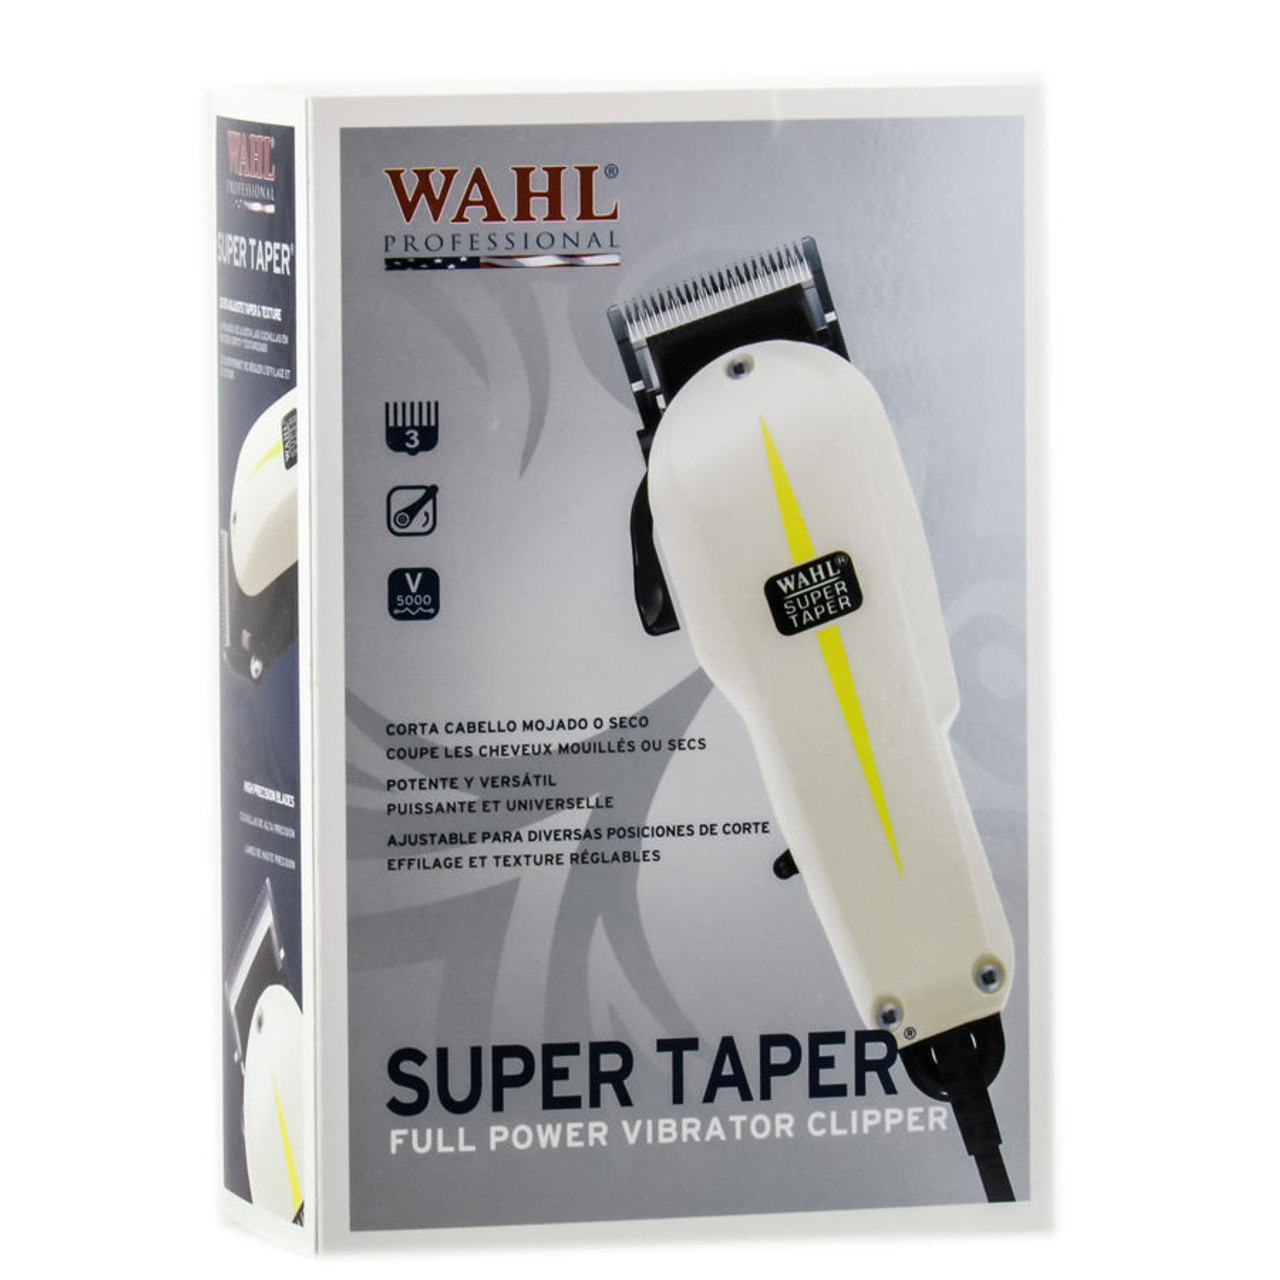 WAHL Professional Super Taper Clipper 8400